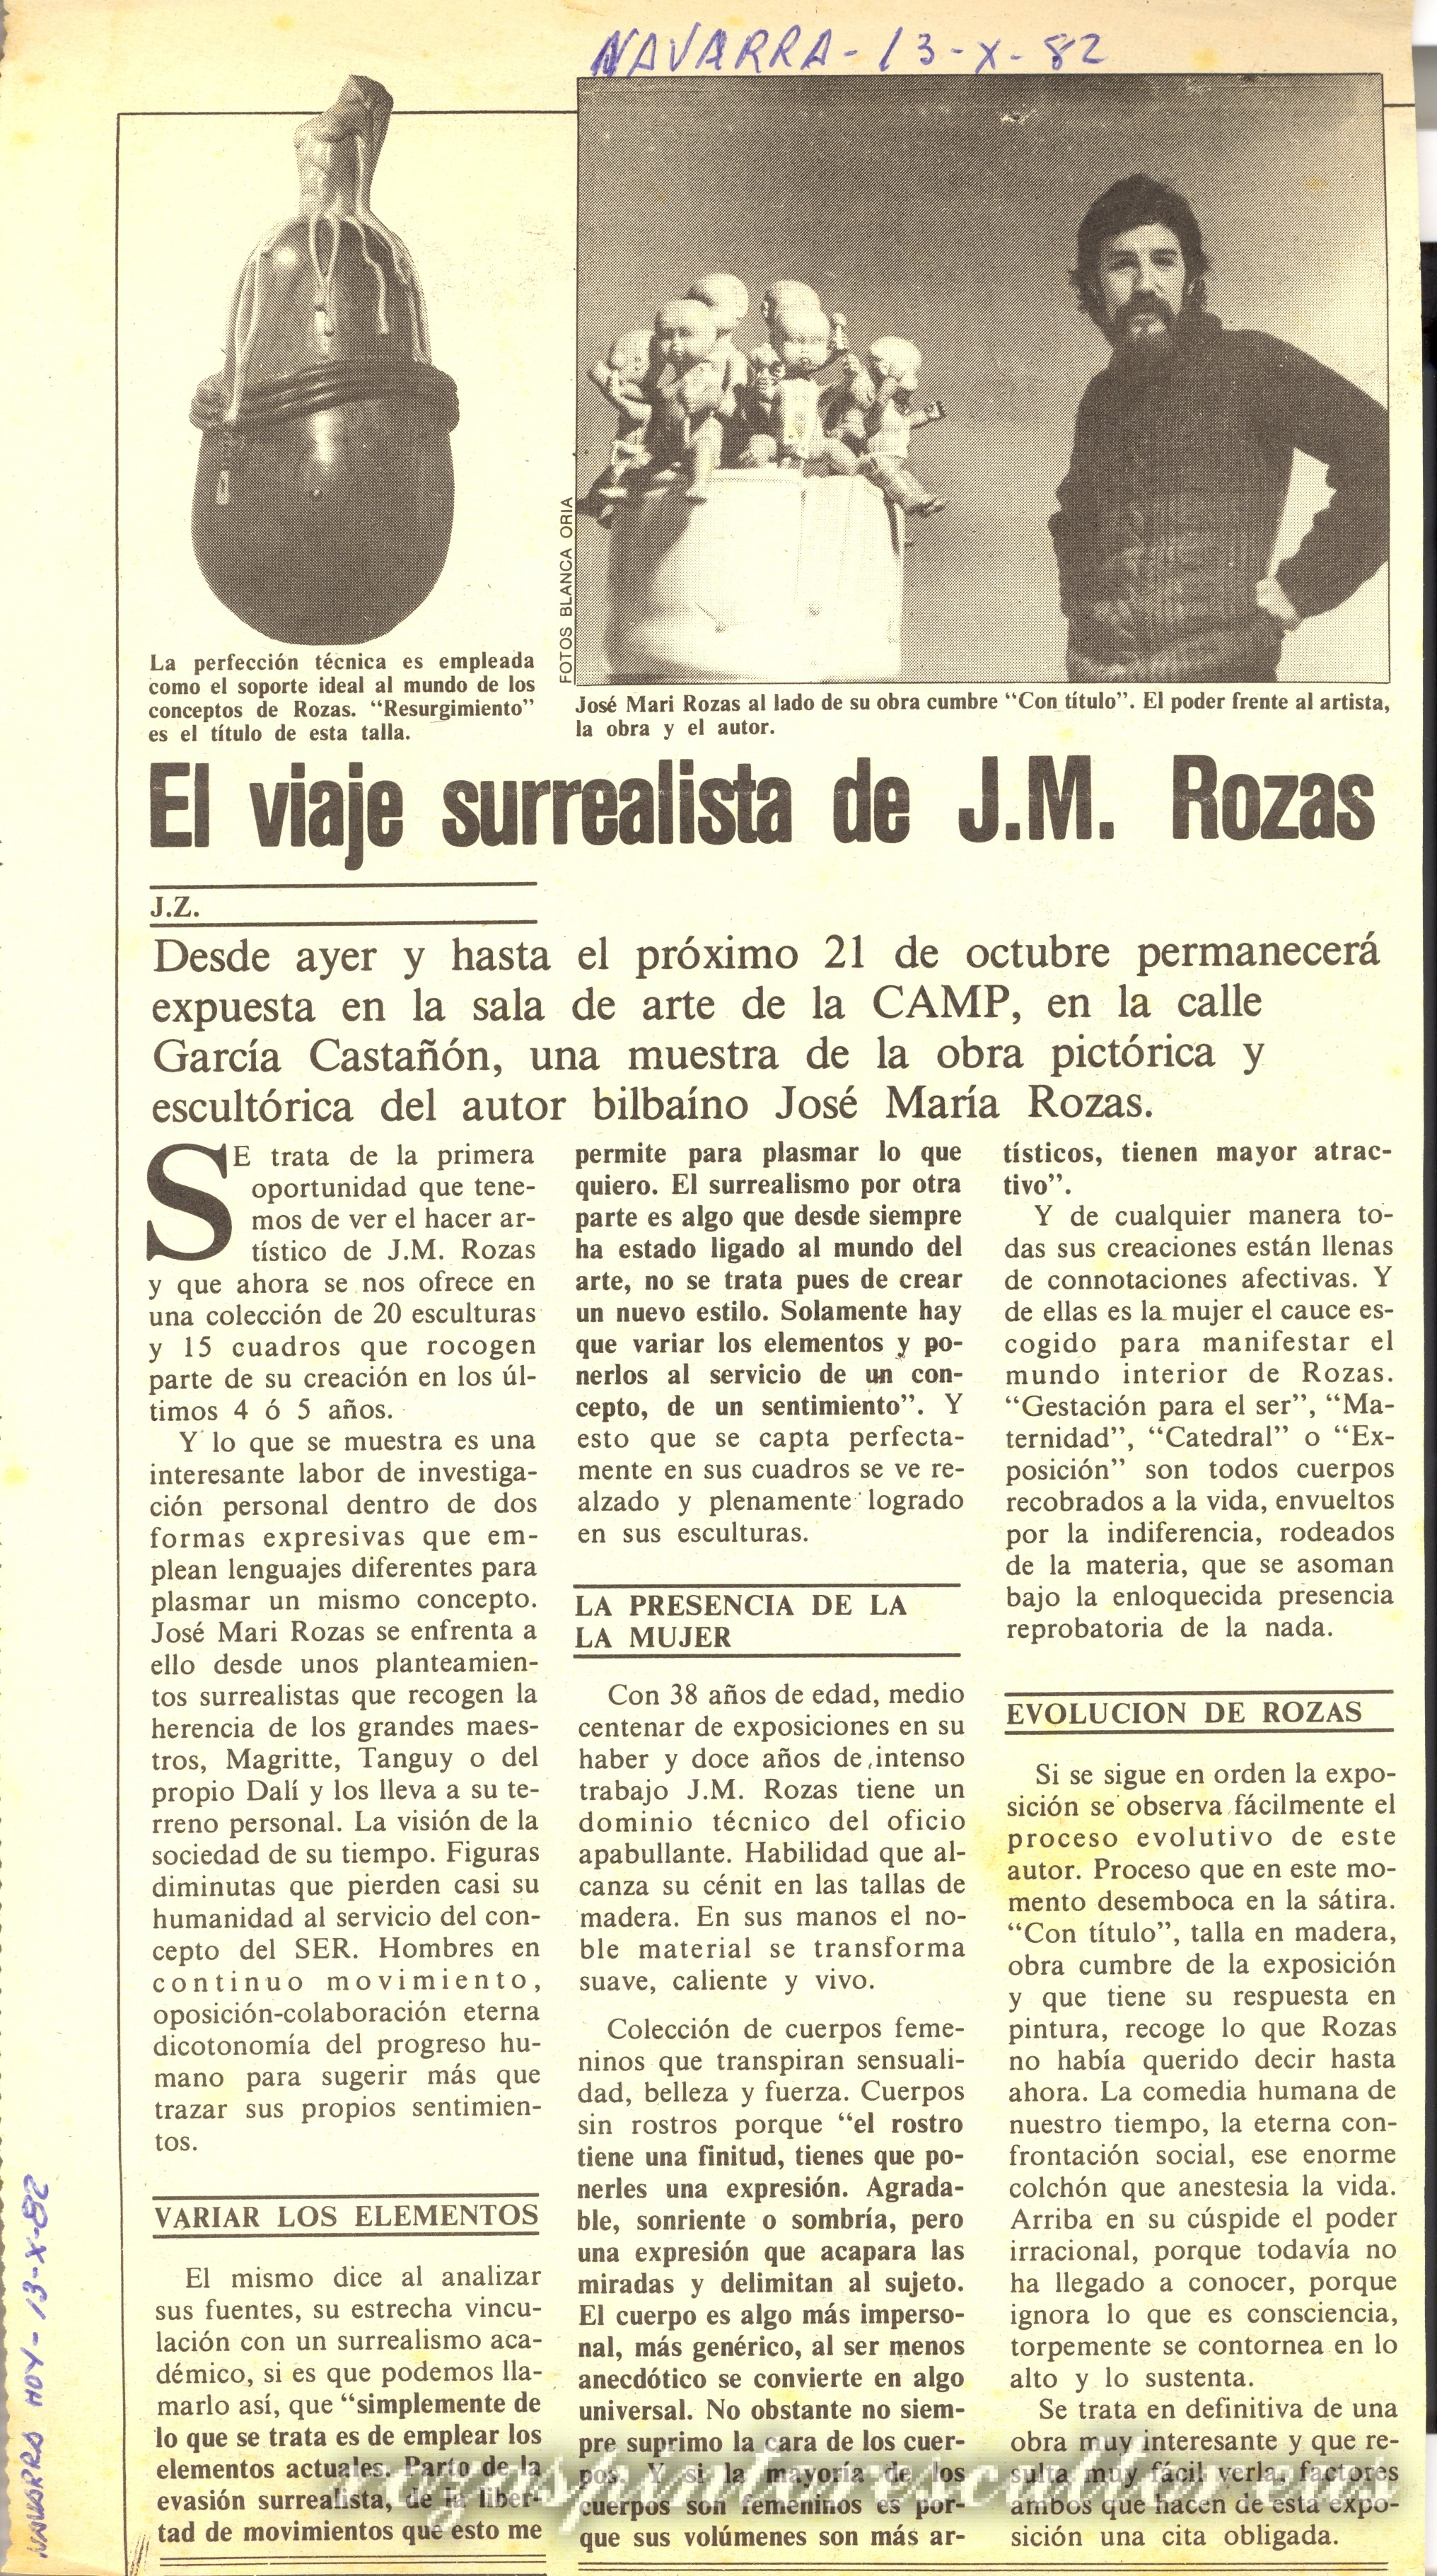 1982 Navarra Hoy – The surreal journey of J.M. Rozas